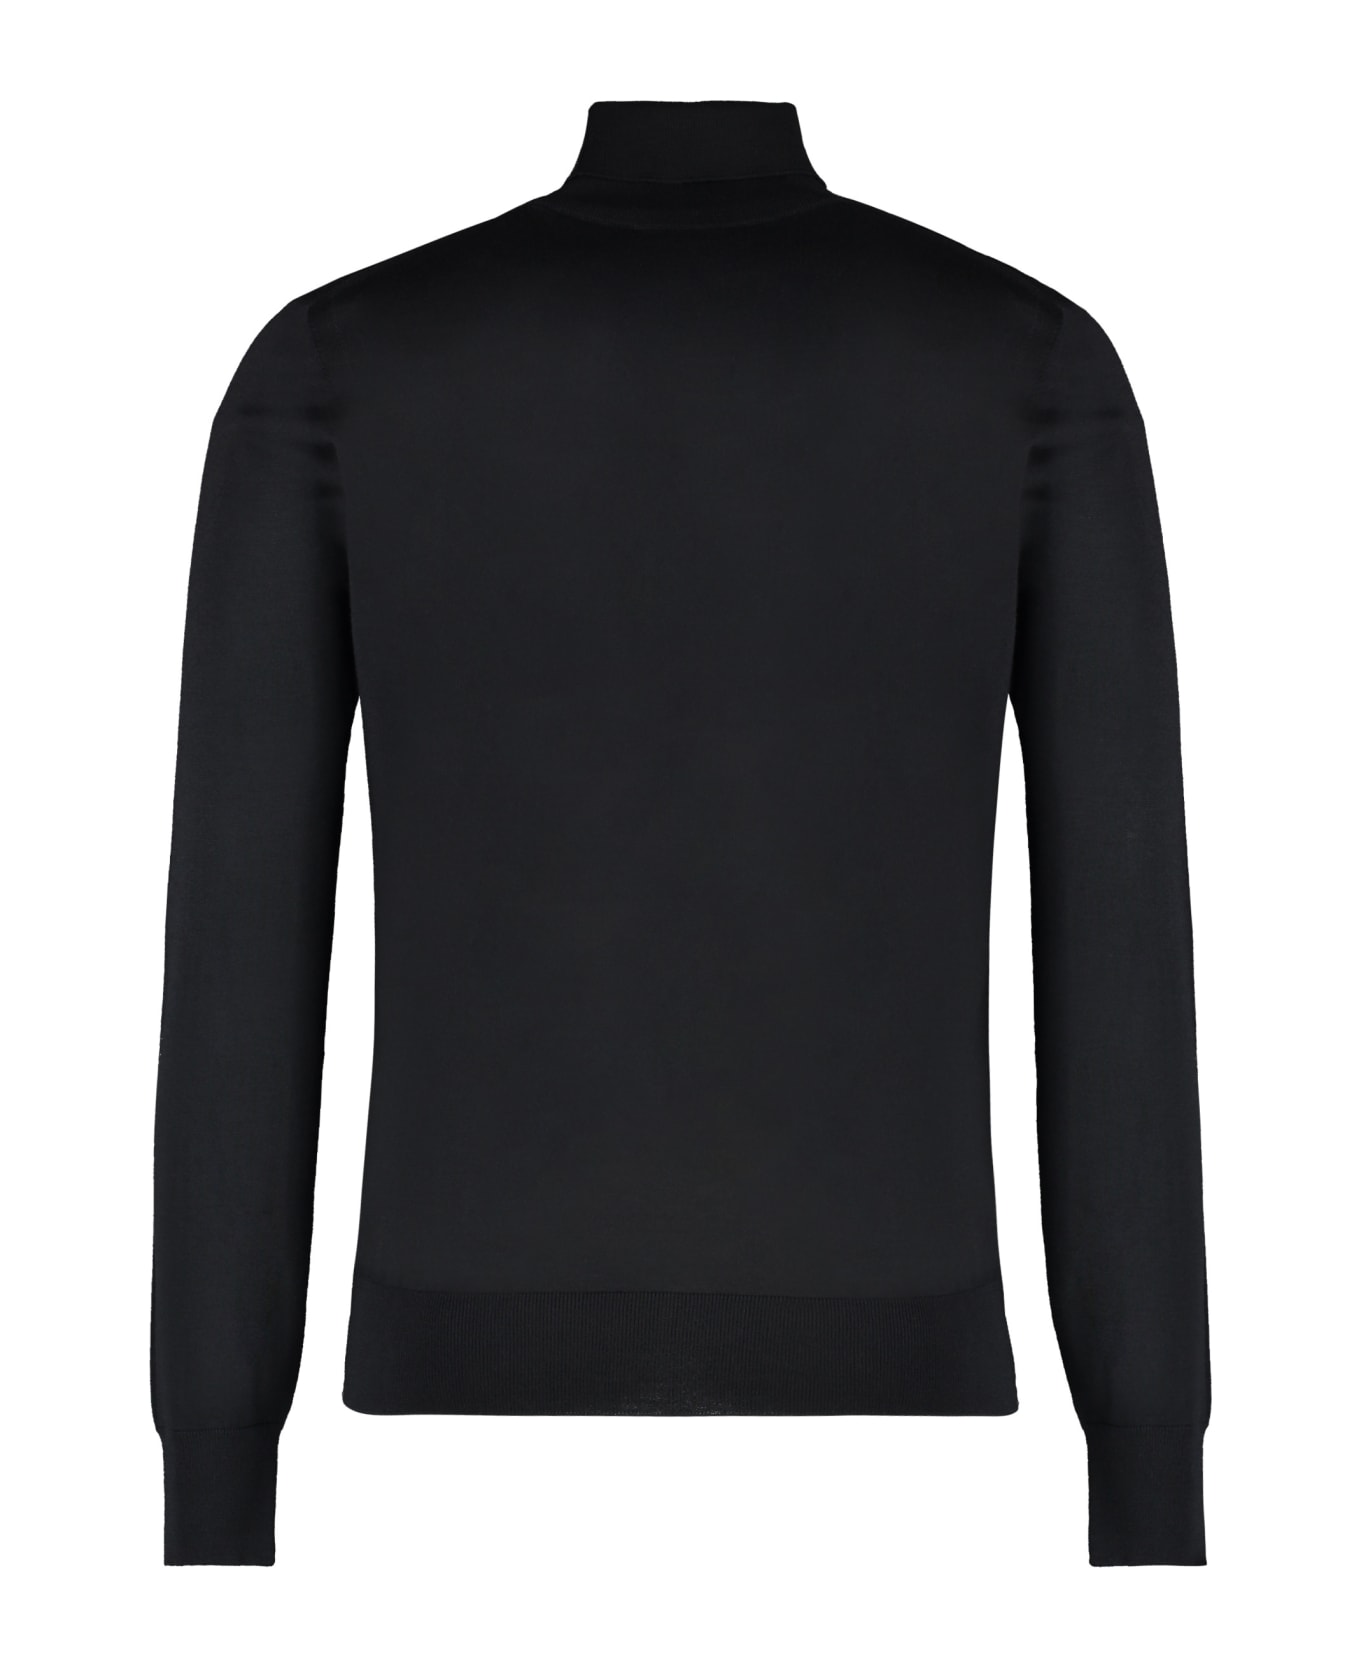 Versace Wool Blend Turtleneck Sweater - black